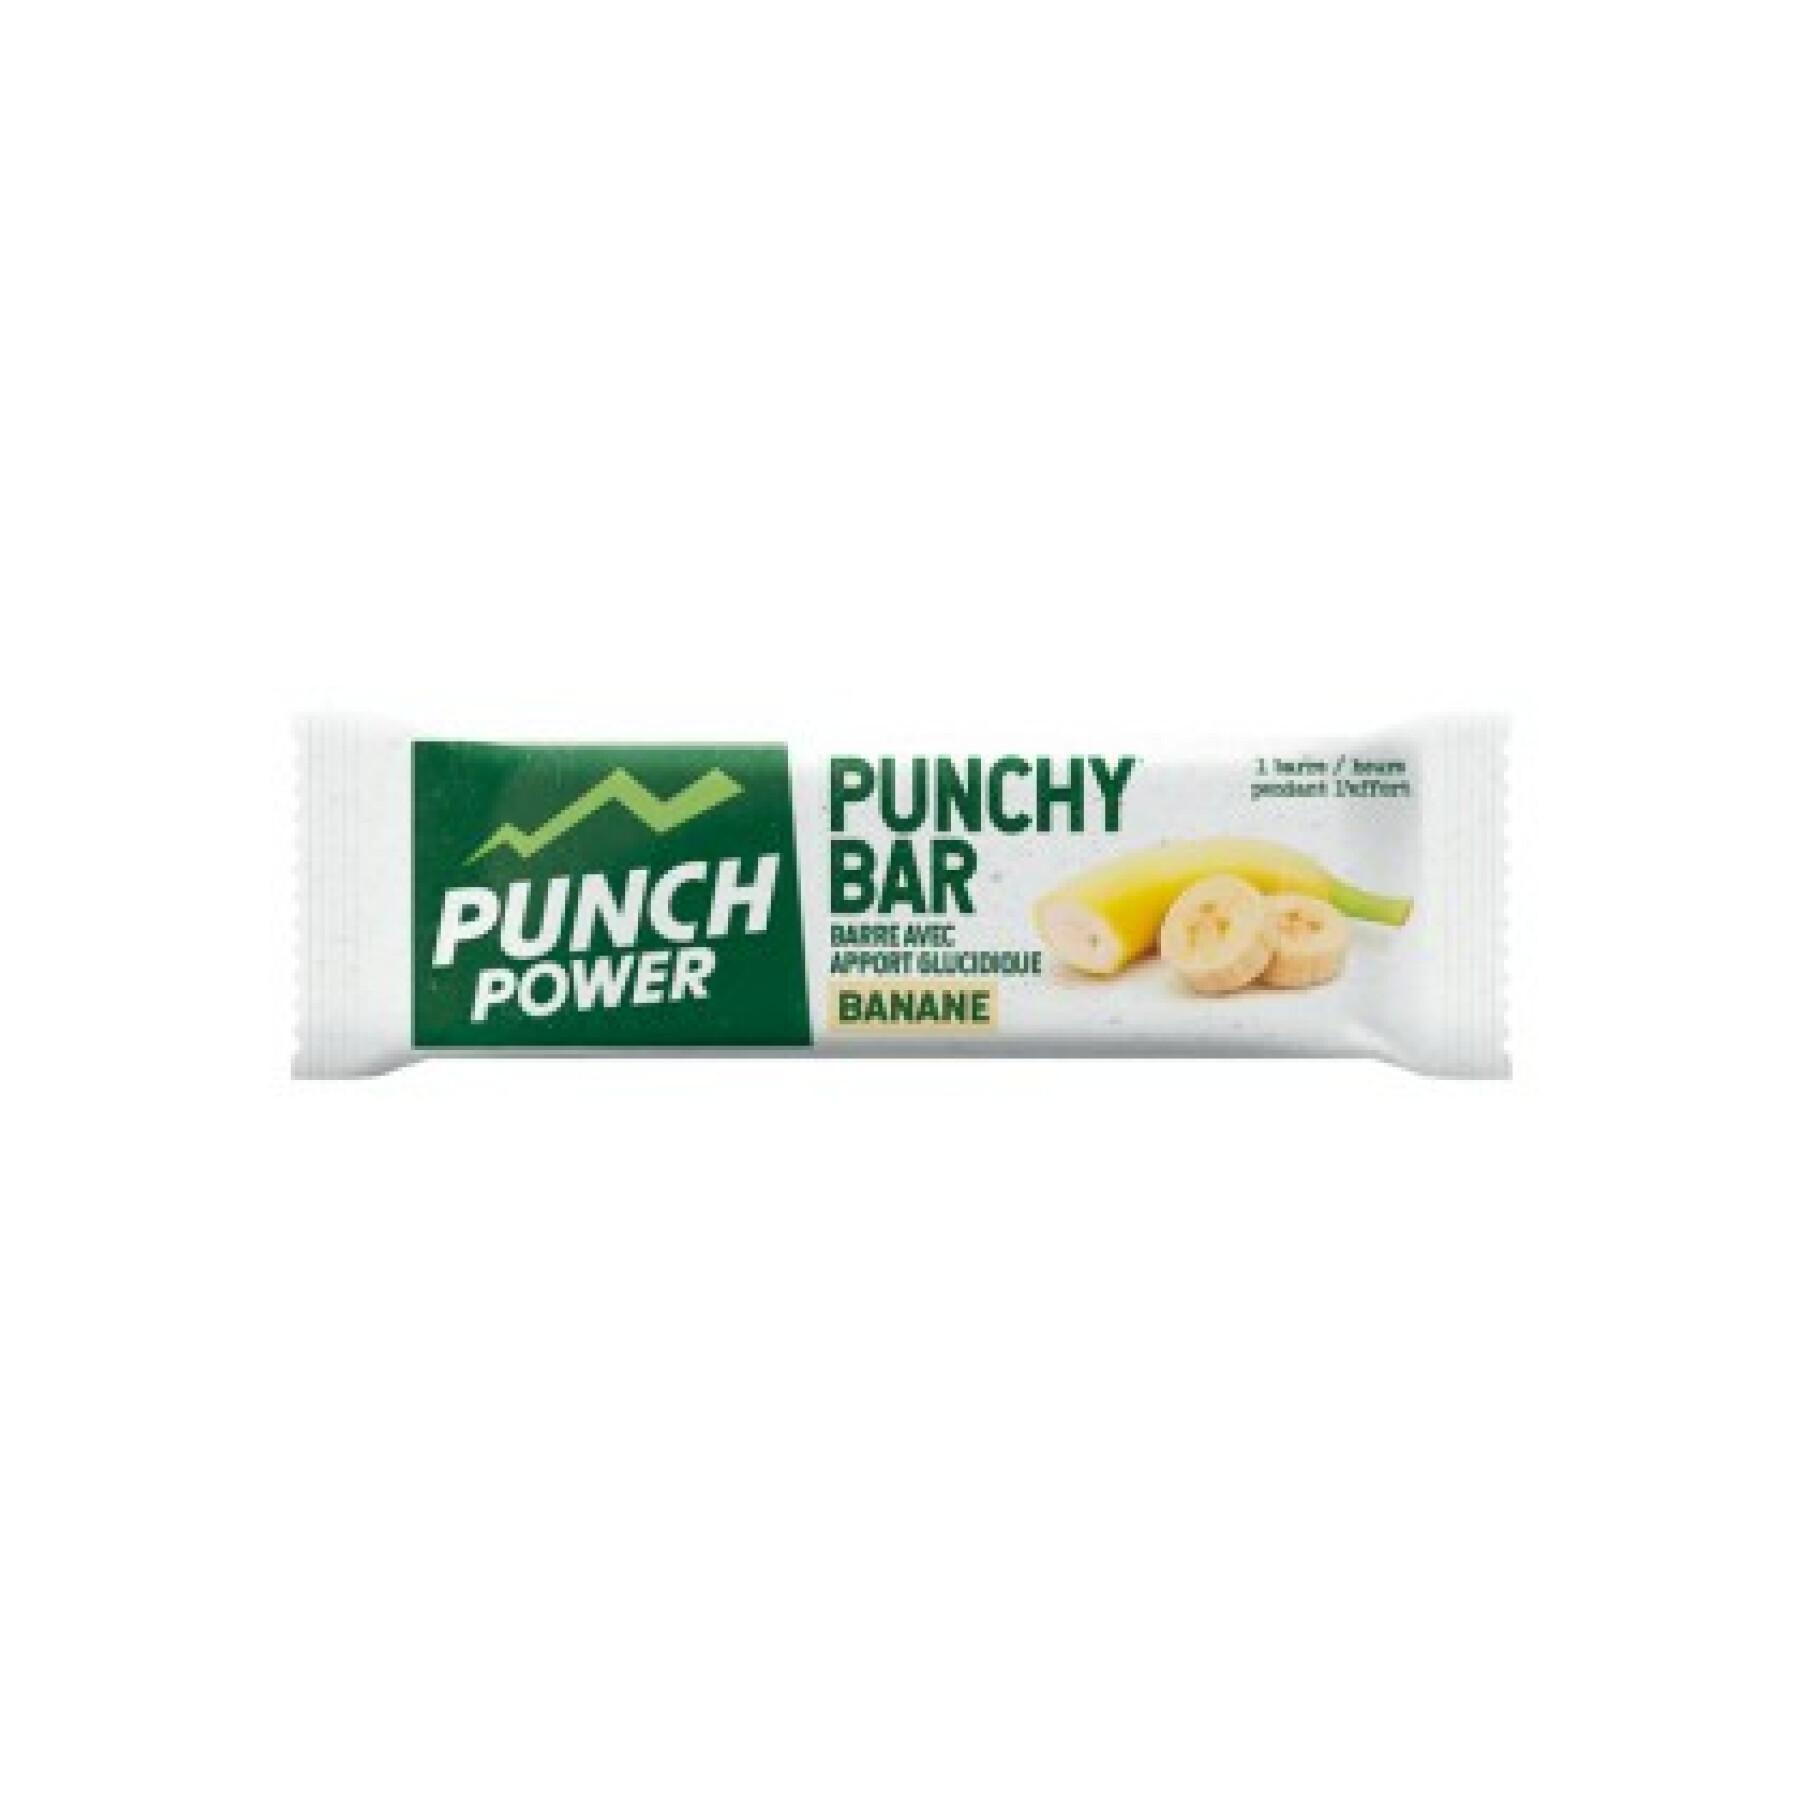 Muestra 40 barras de energía Punch Power Punchybar Banane